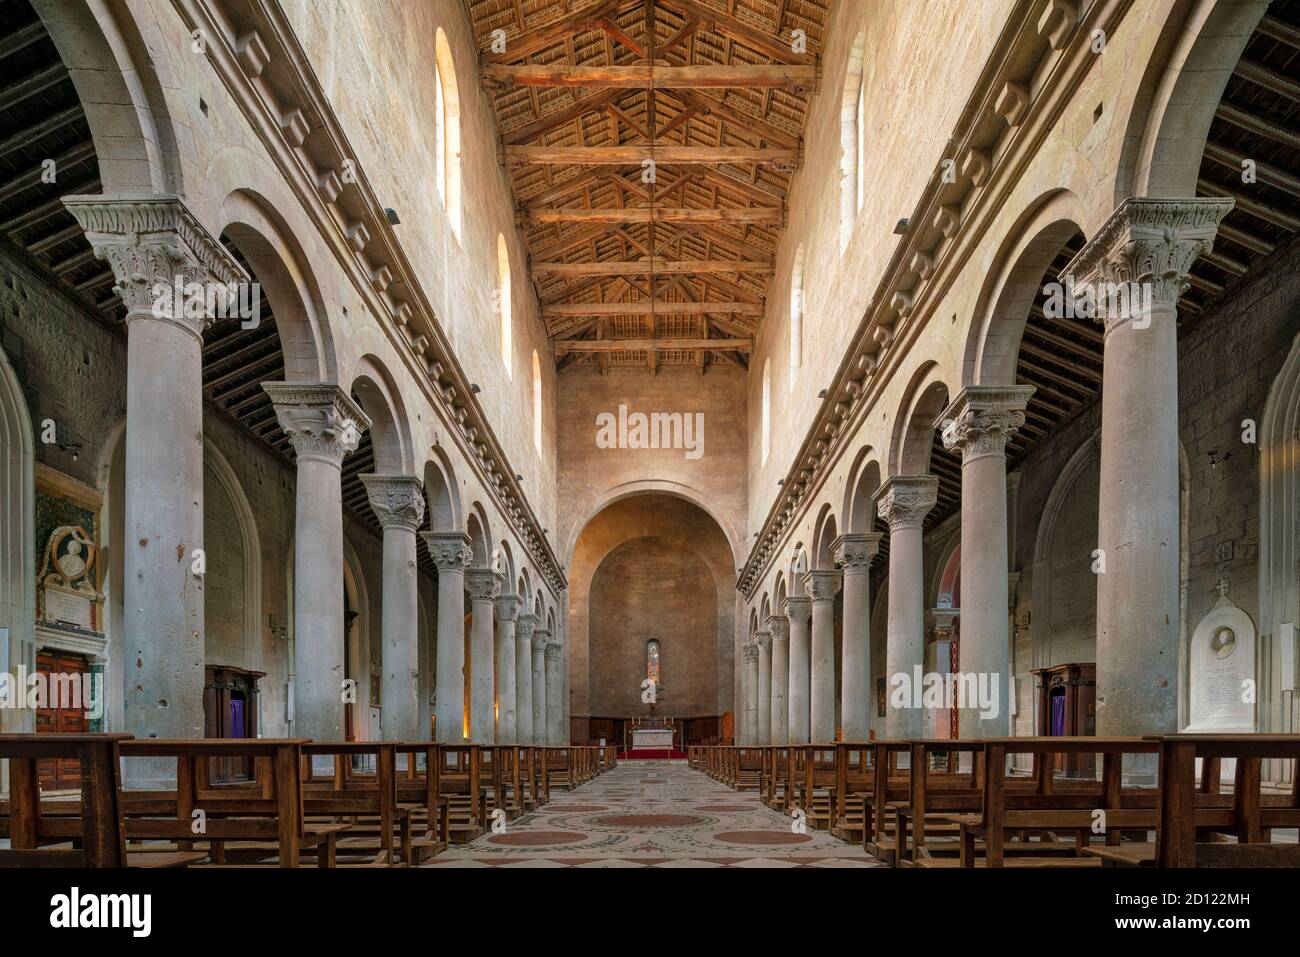 Duomo de Viterbo, Italia. Interior románico del siglo XII de la Catedral de San Lorenzo, Viterbo, Lazio, Italia. Foto de stock